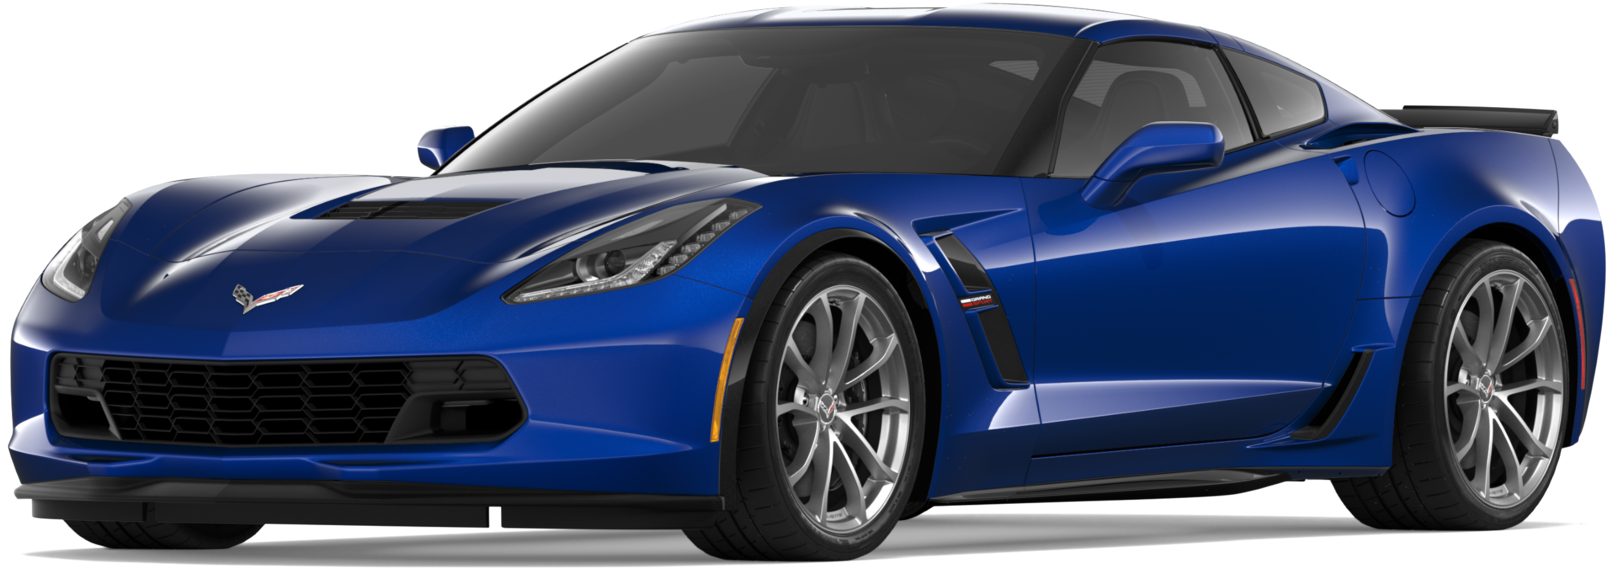 2019 Corvette Grand Sport - 2019 Corvette Z06 Black (1613x645), Png Download